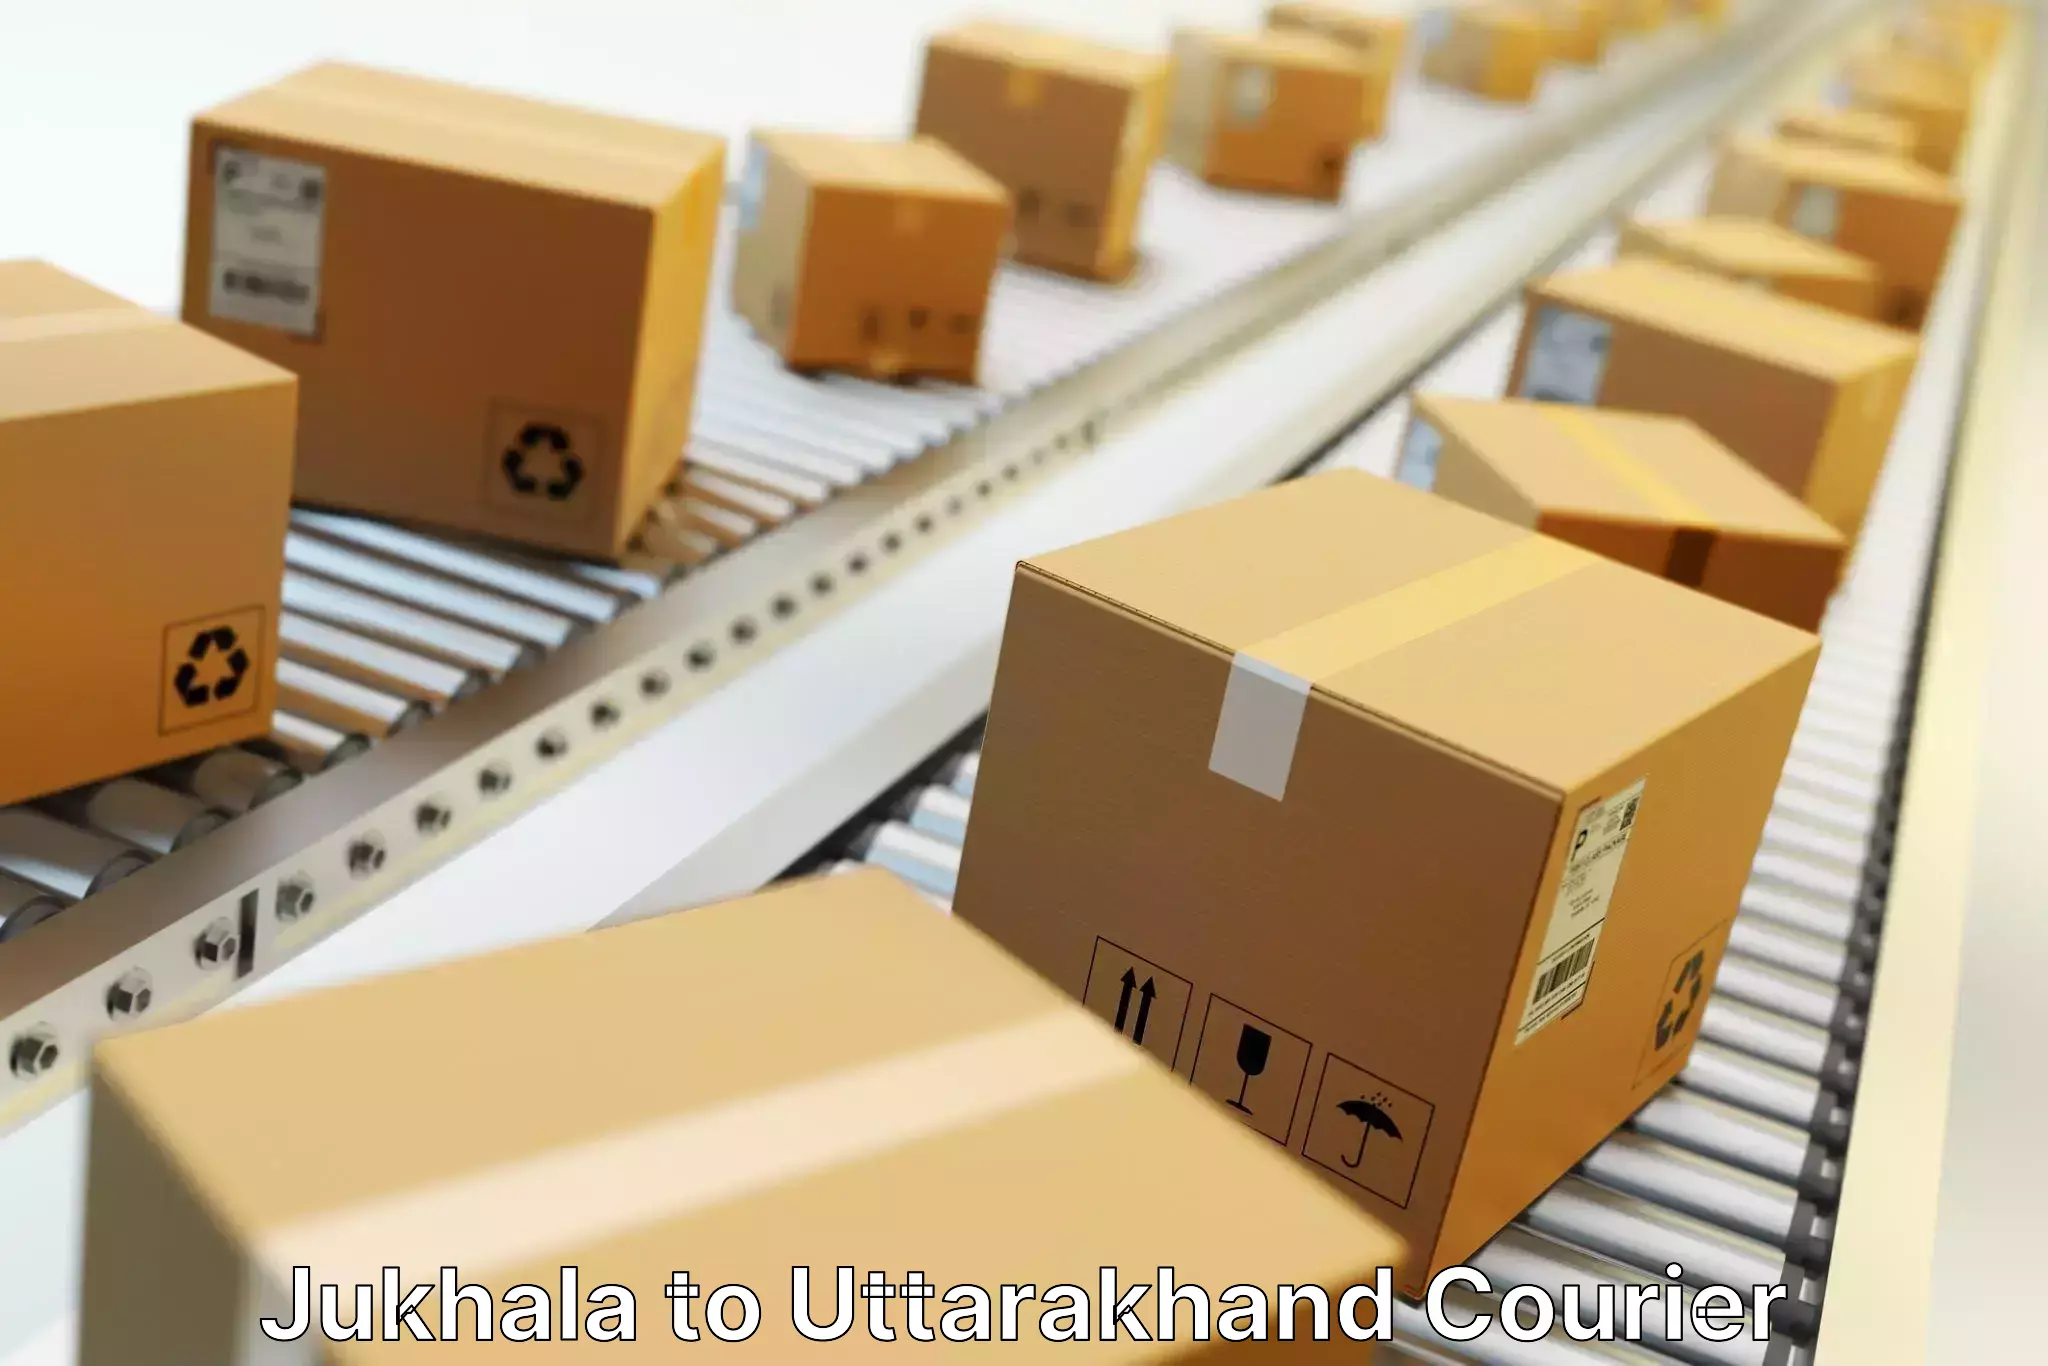 Global logistics network Jukhala to Uttarakhand